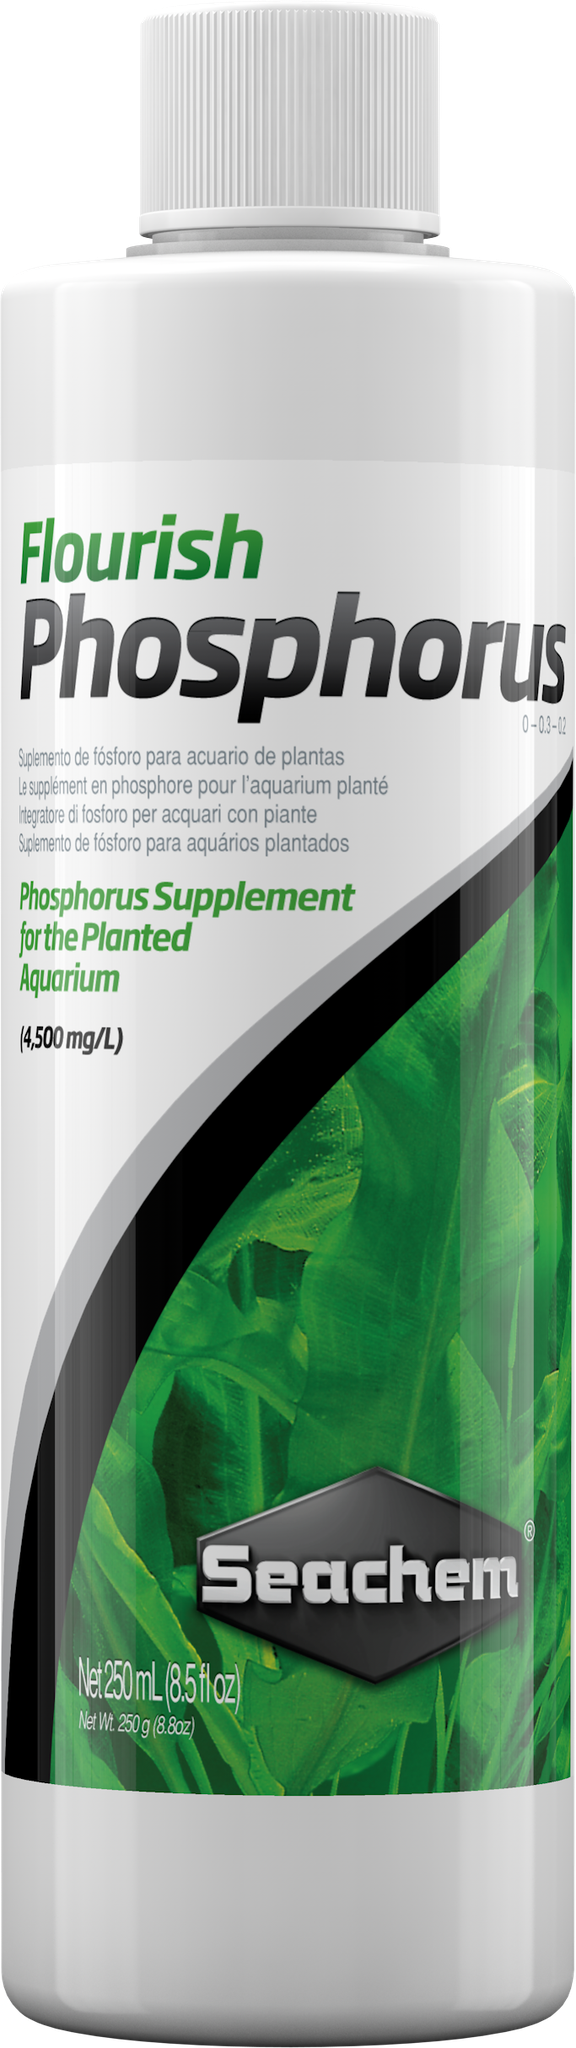 Seachem Flourish Phosphorus - Plant Macro Nutrient